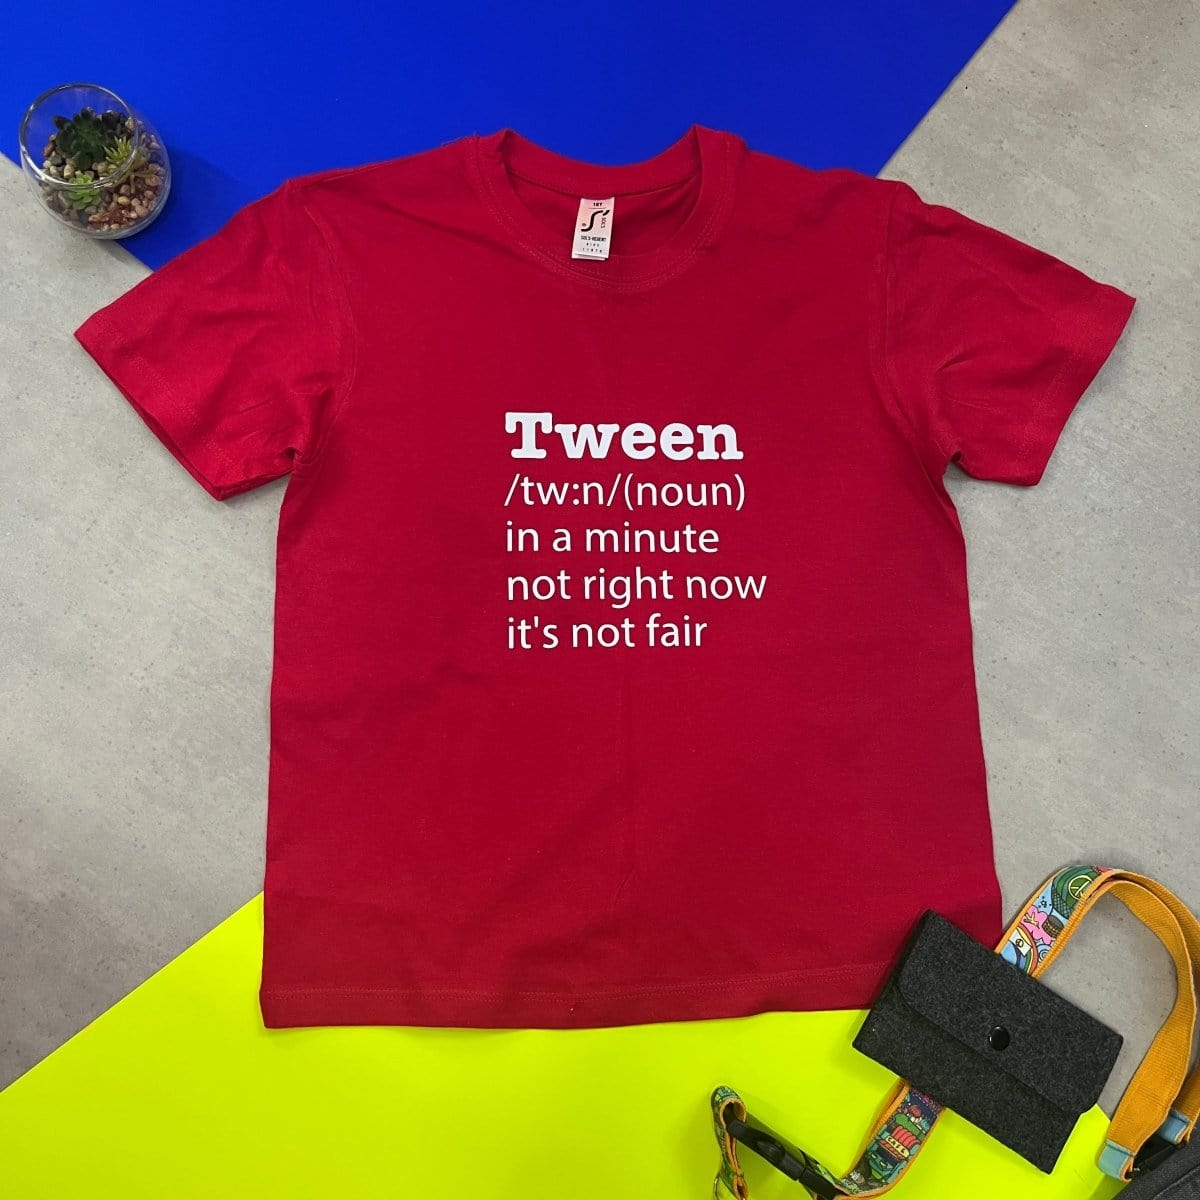 Tween Funny Definition Teenager Shirt, Tween meaning teenager t shirt